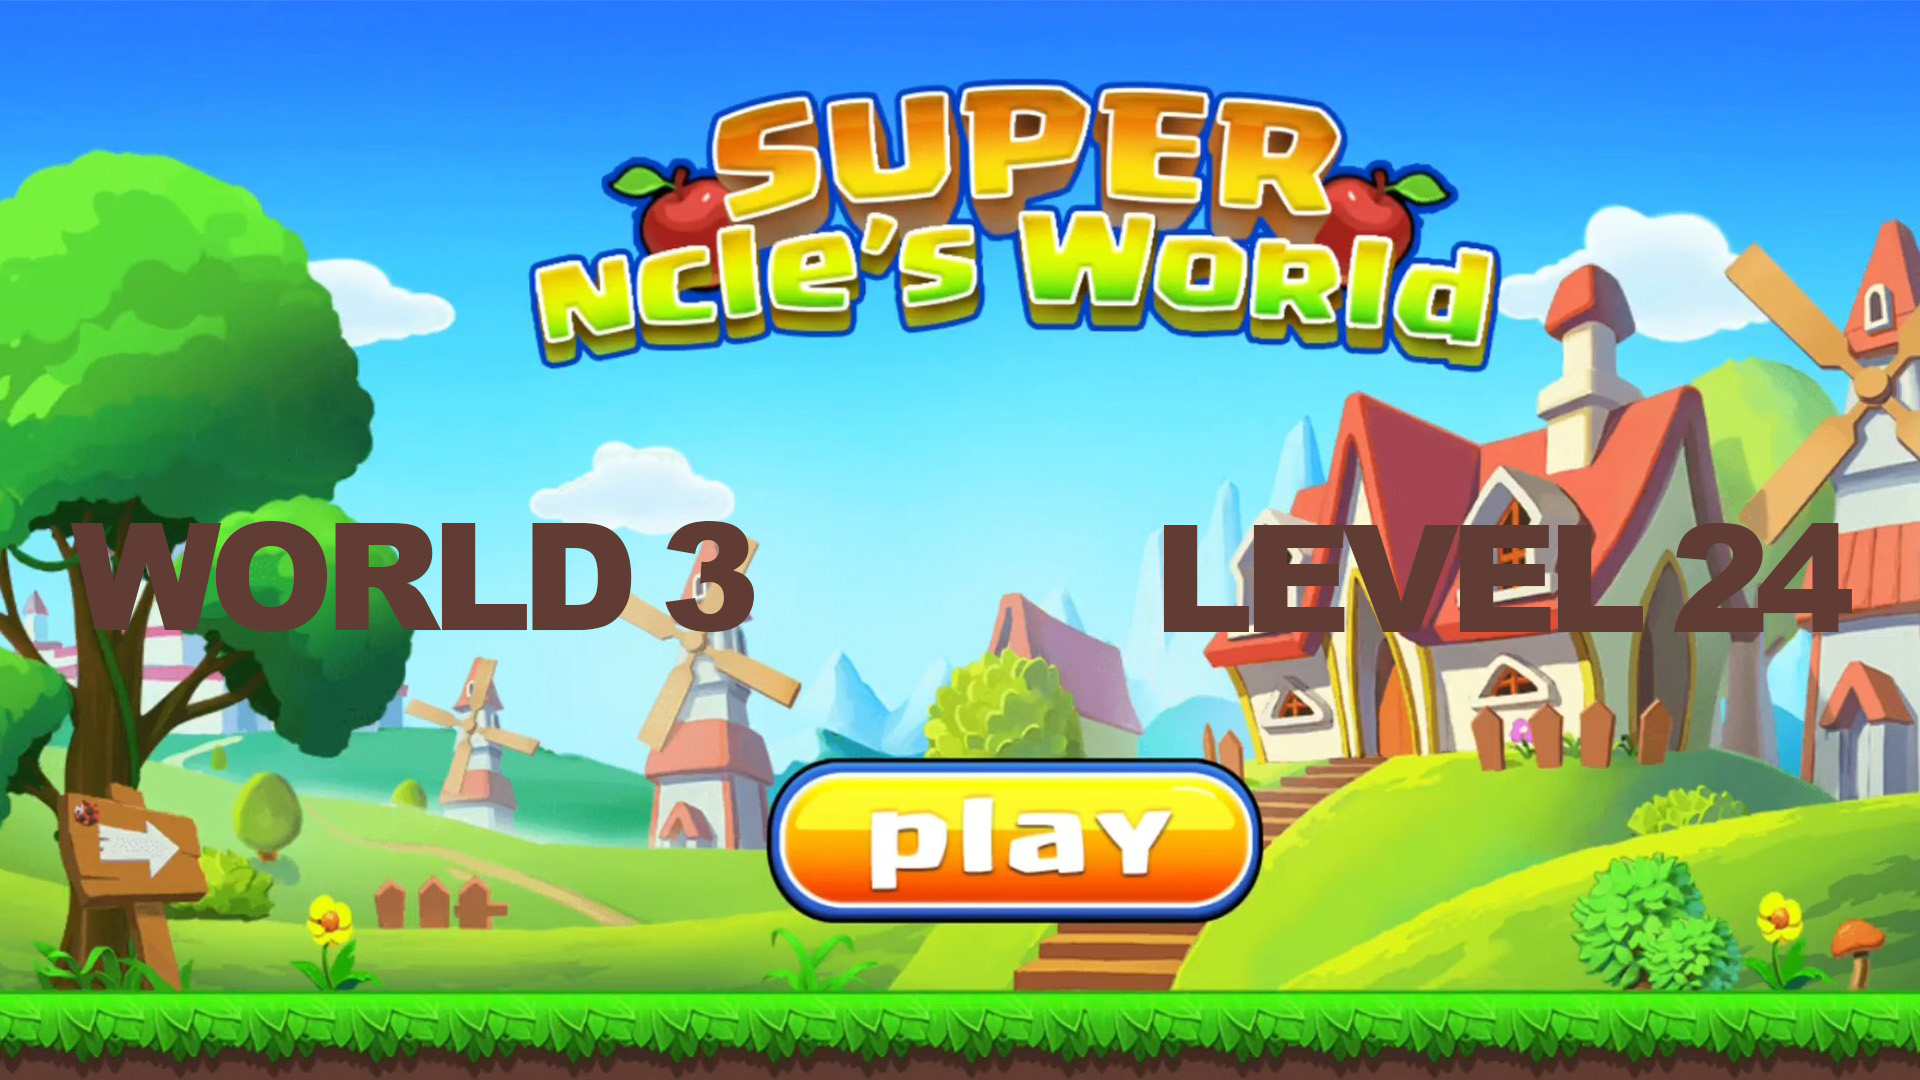 Super ncle's  World 3. Level 24.